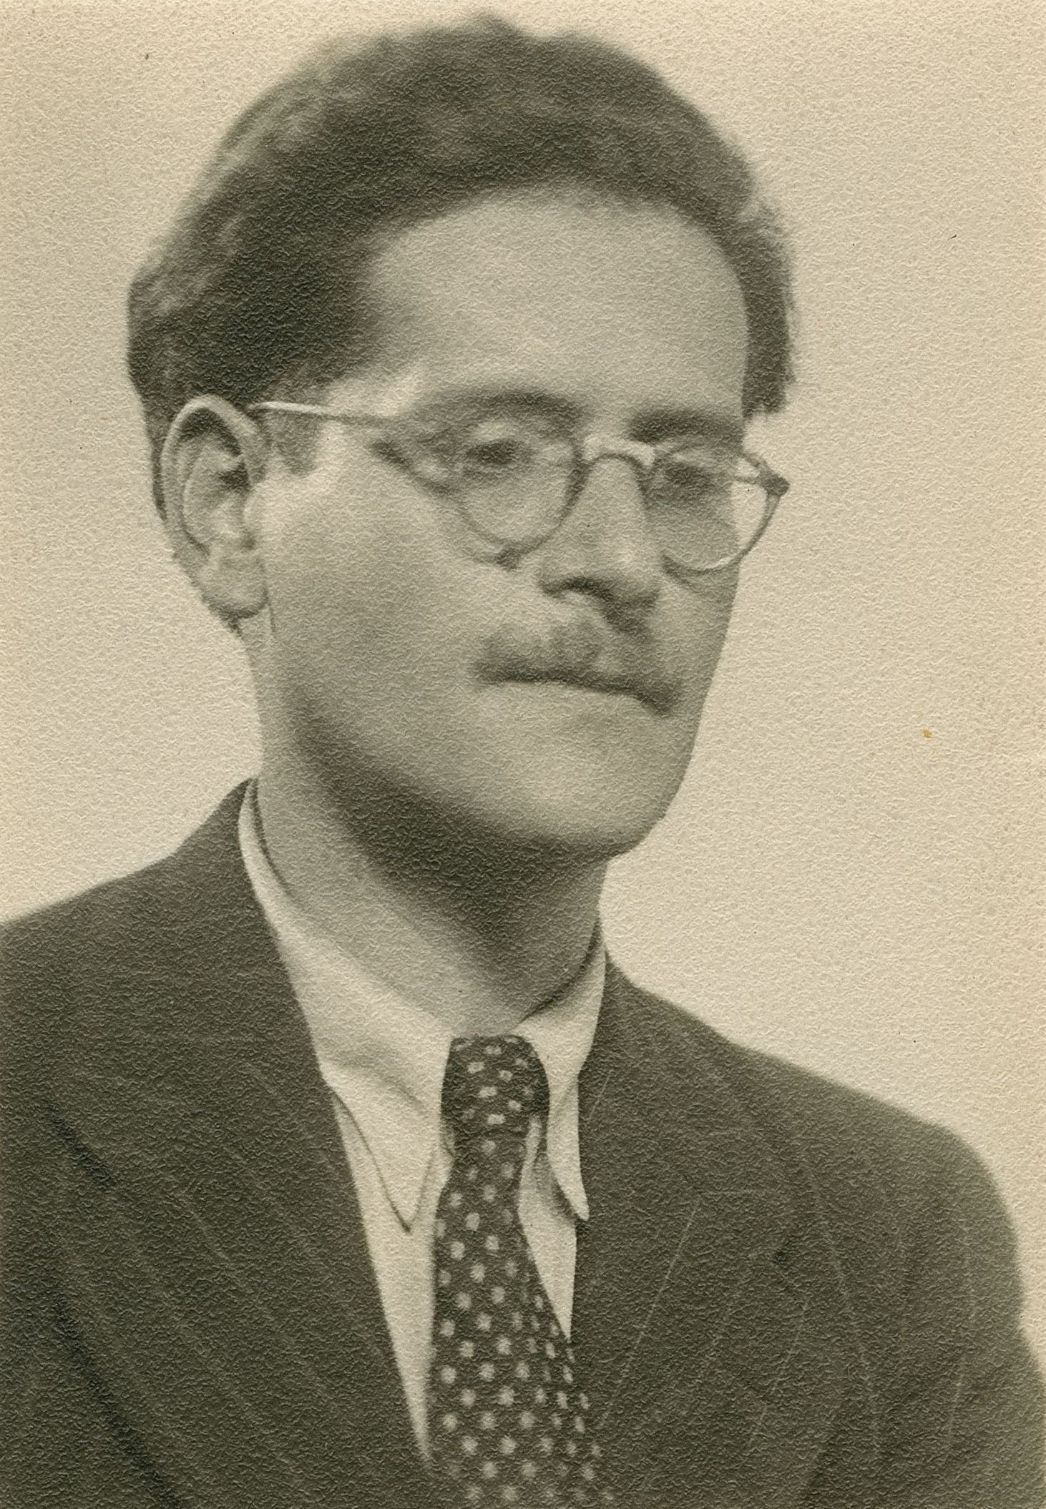 Portrait photograph of H. G. Adler